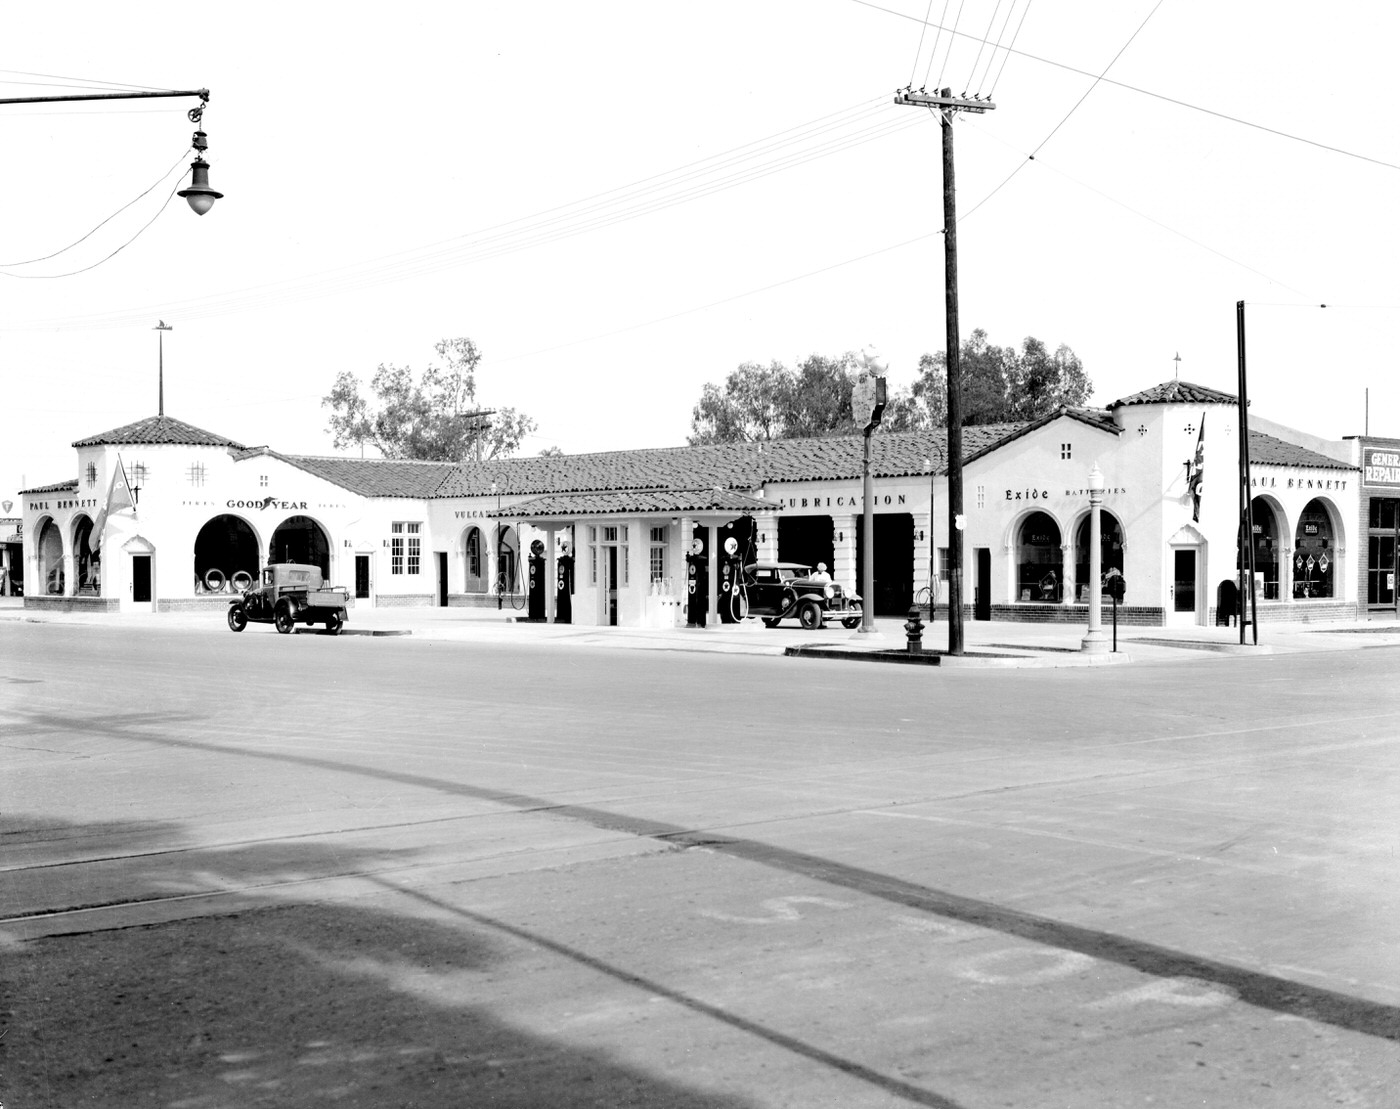 Paul Bennett Service Station Exterior, 1930s